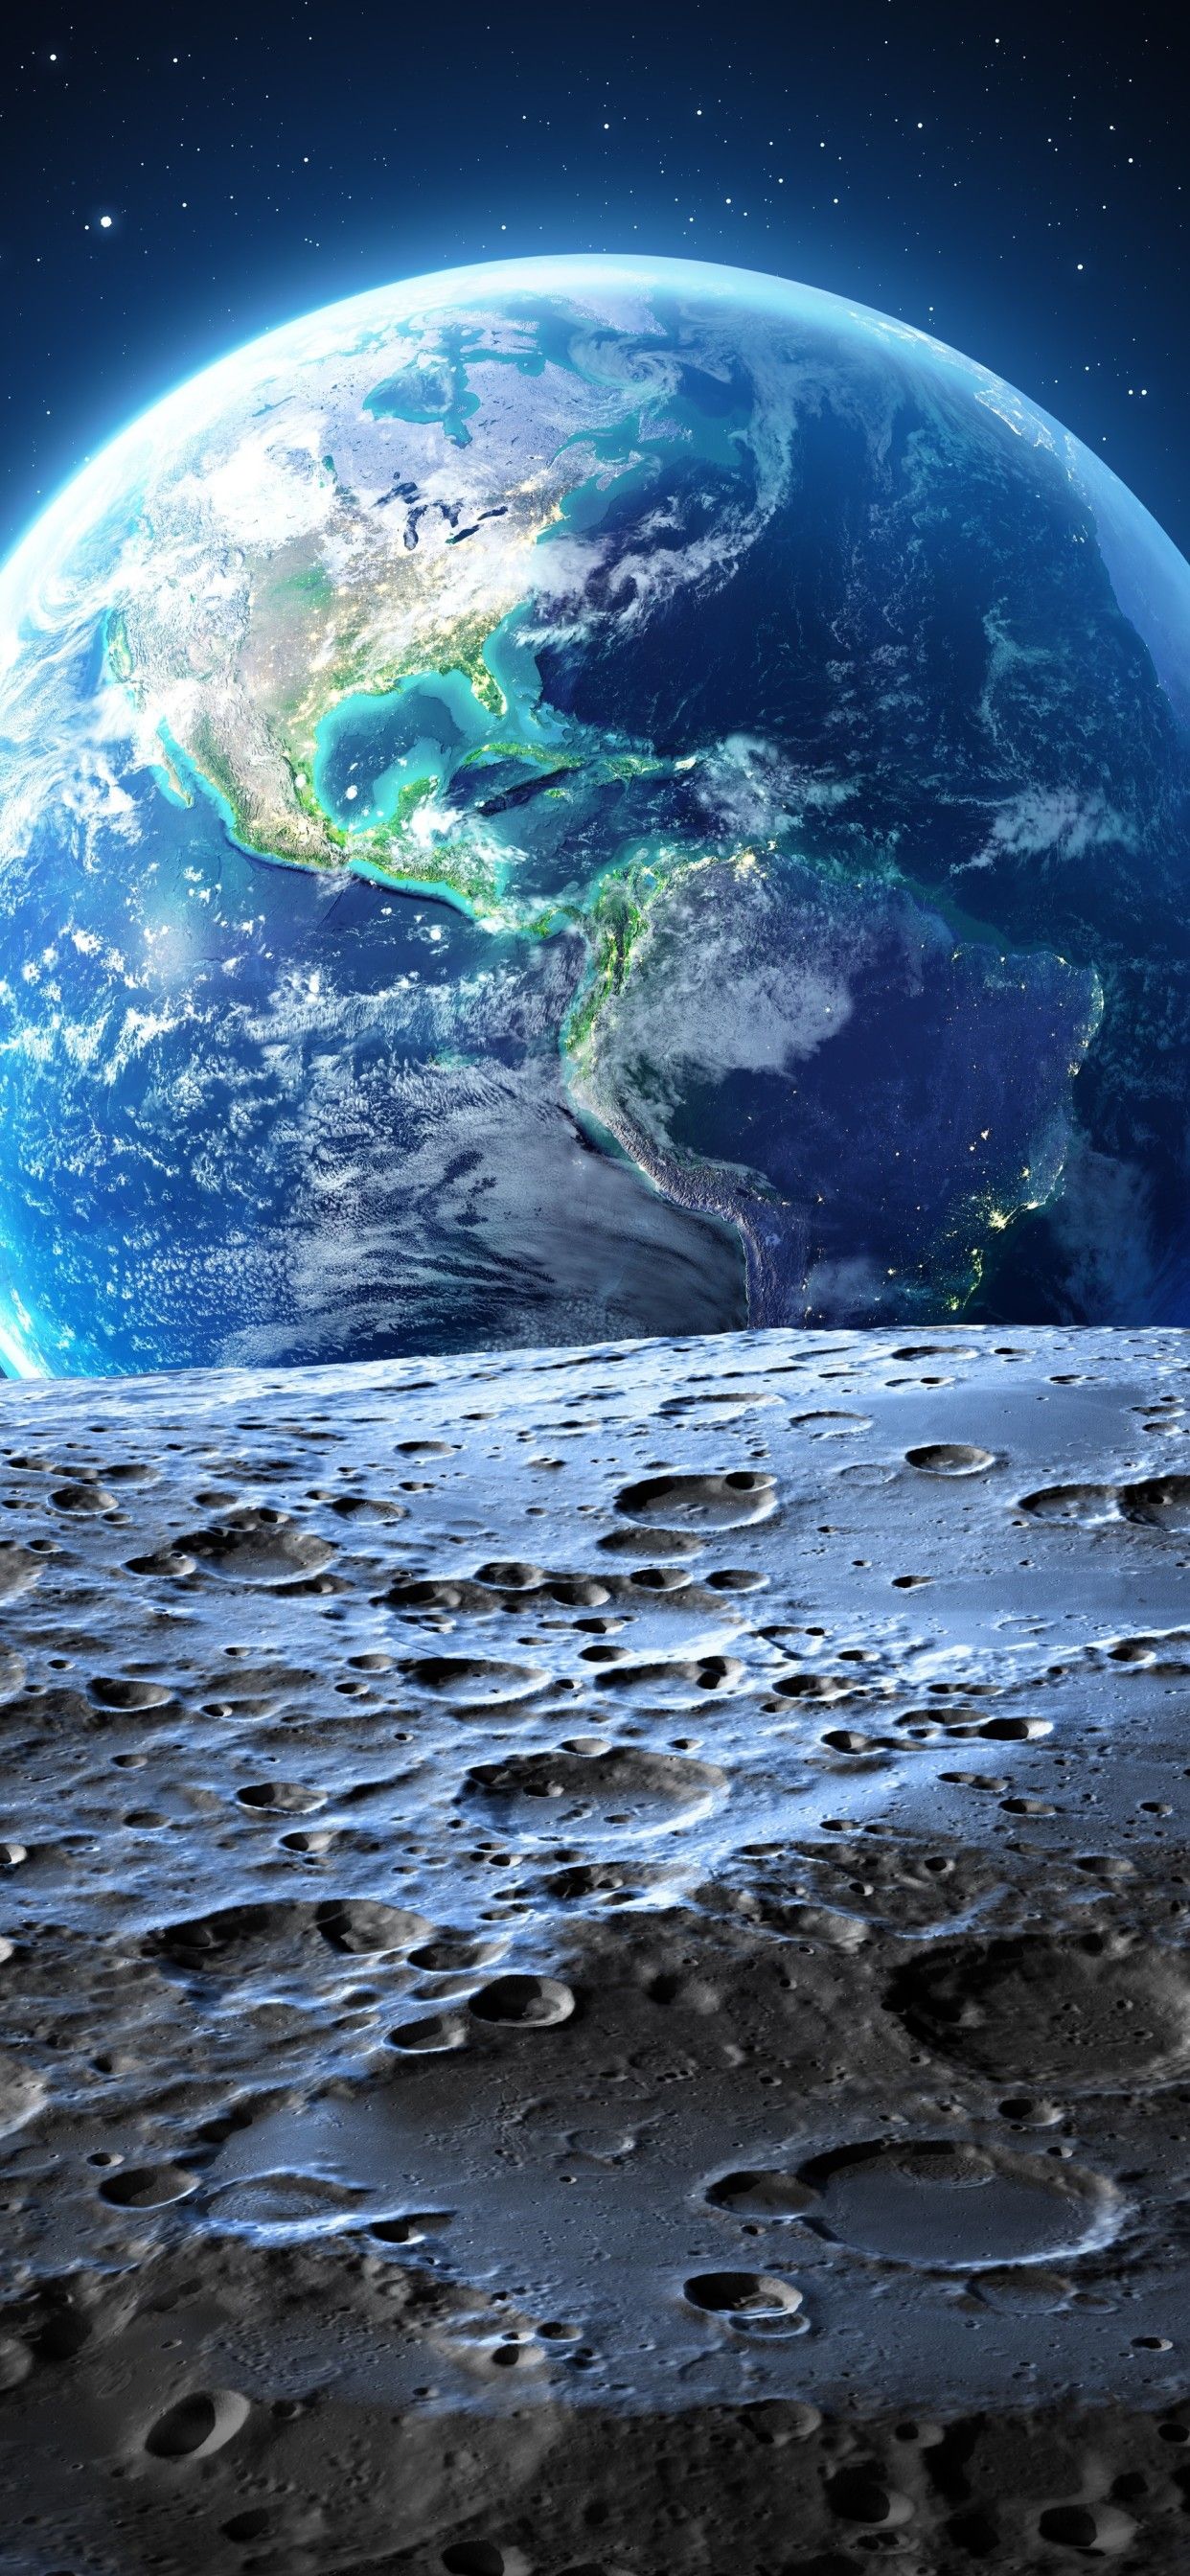 Earth Moon 4k iPhone XS MAX HD 4k Wallpaper, Image